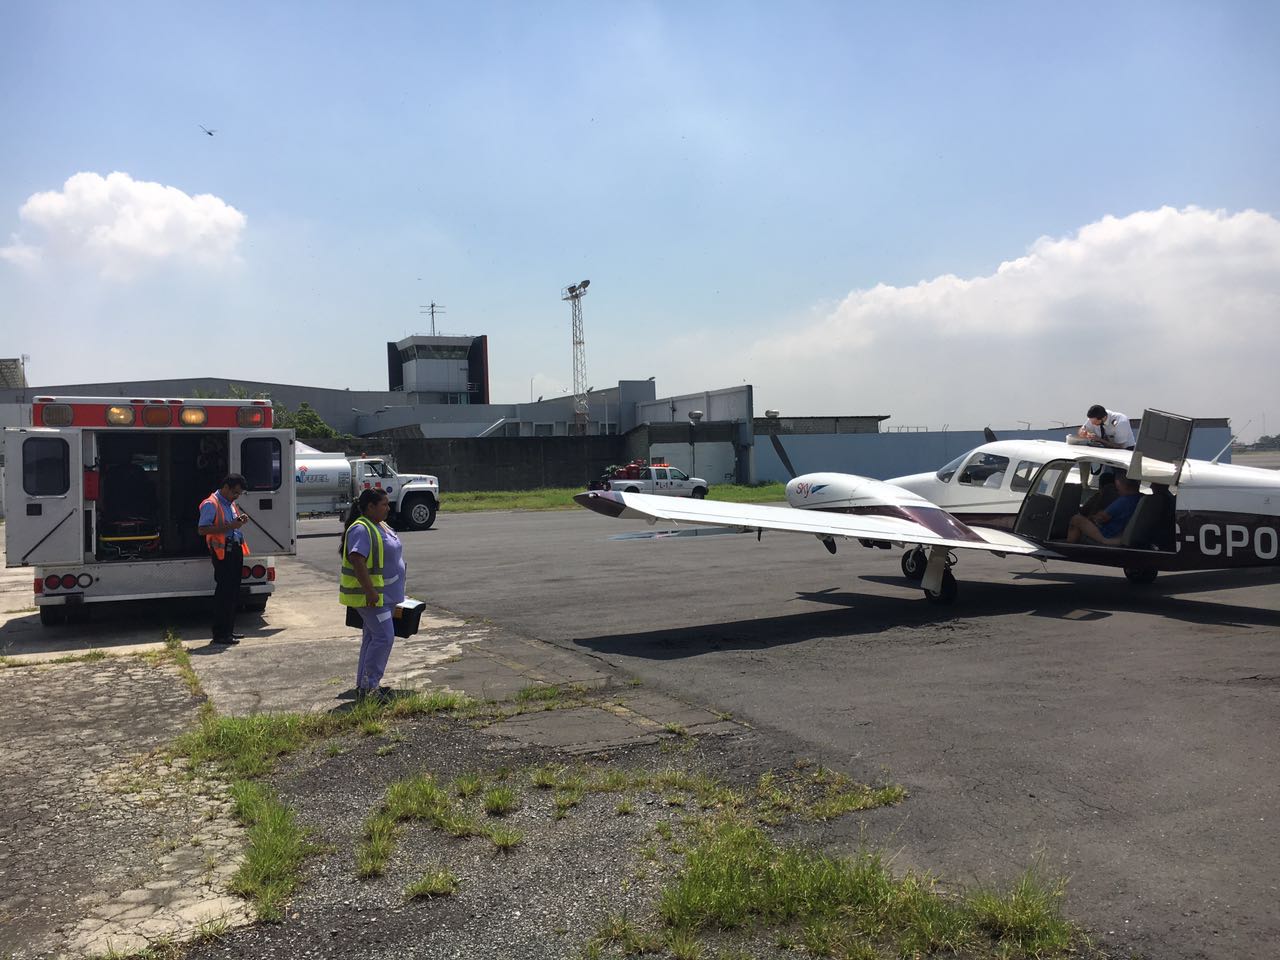 Aerobridge is coordinating relief flights in Ecuador. Photo courtesy of Aerobridge.